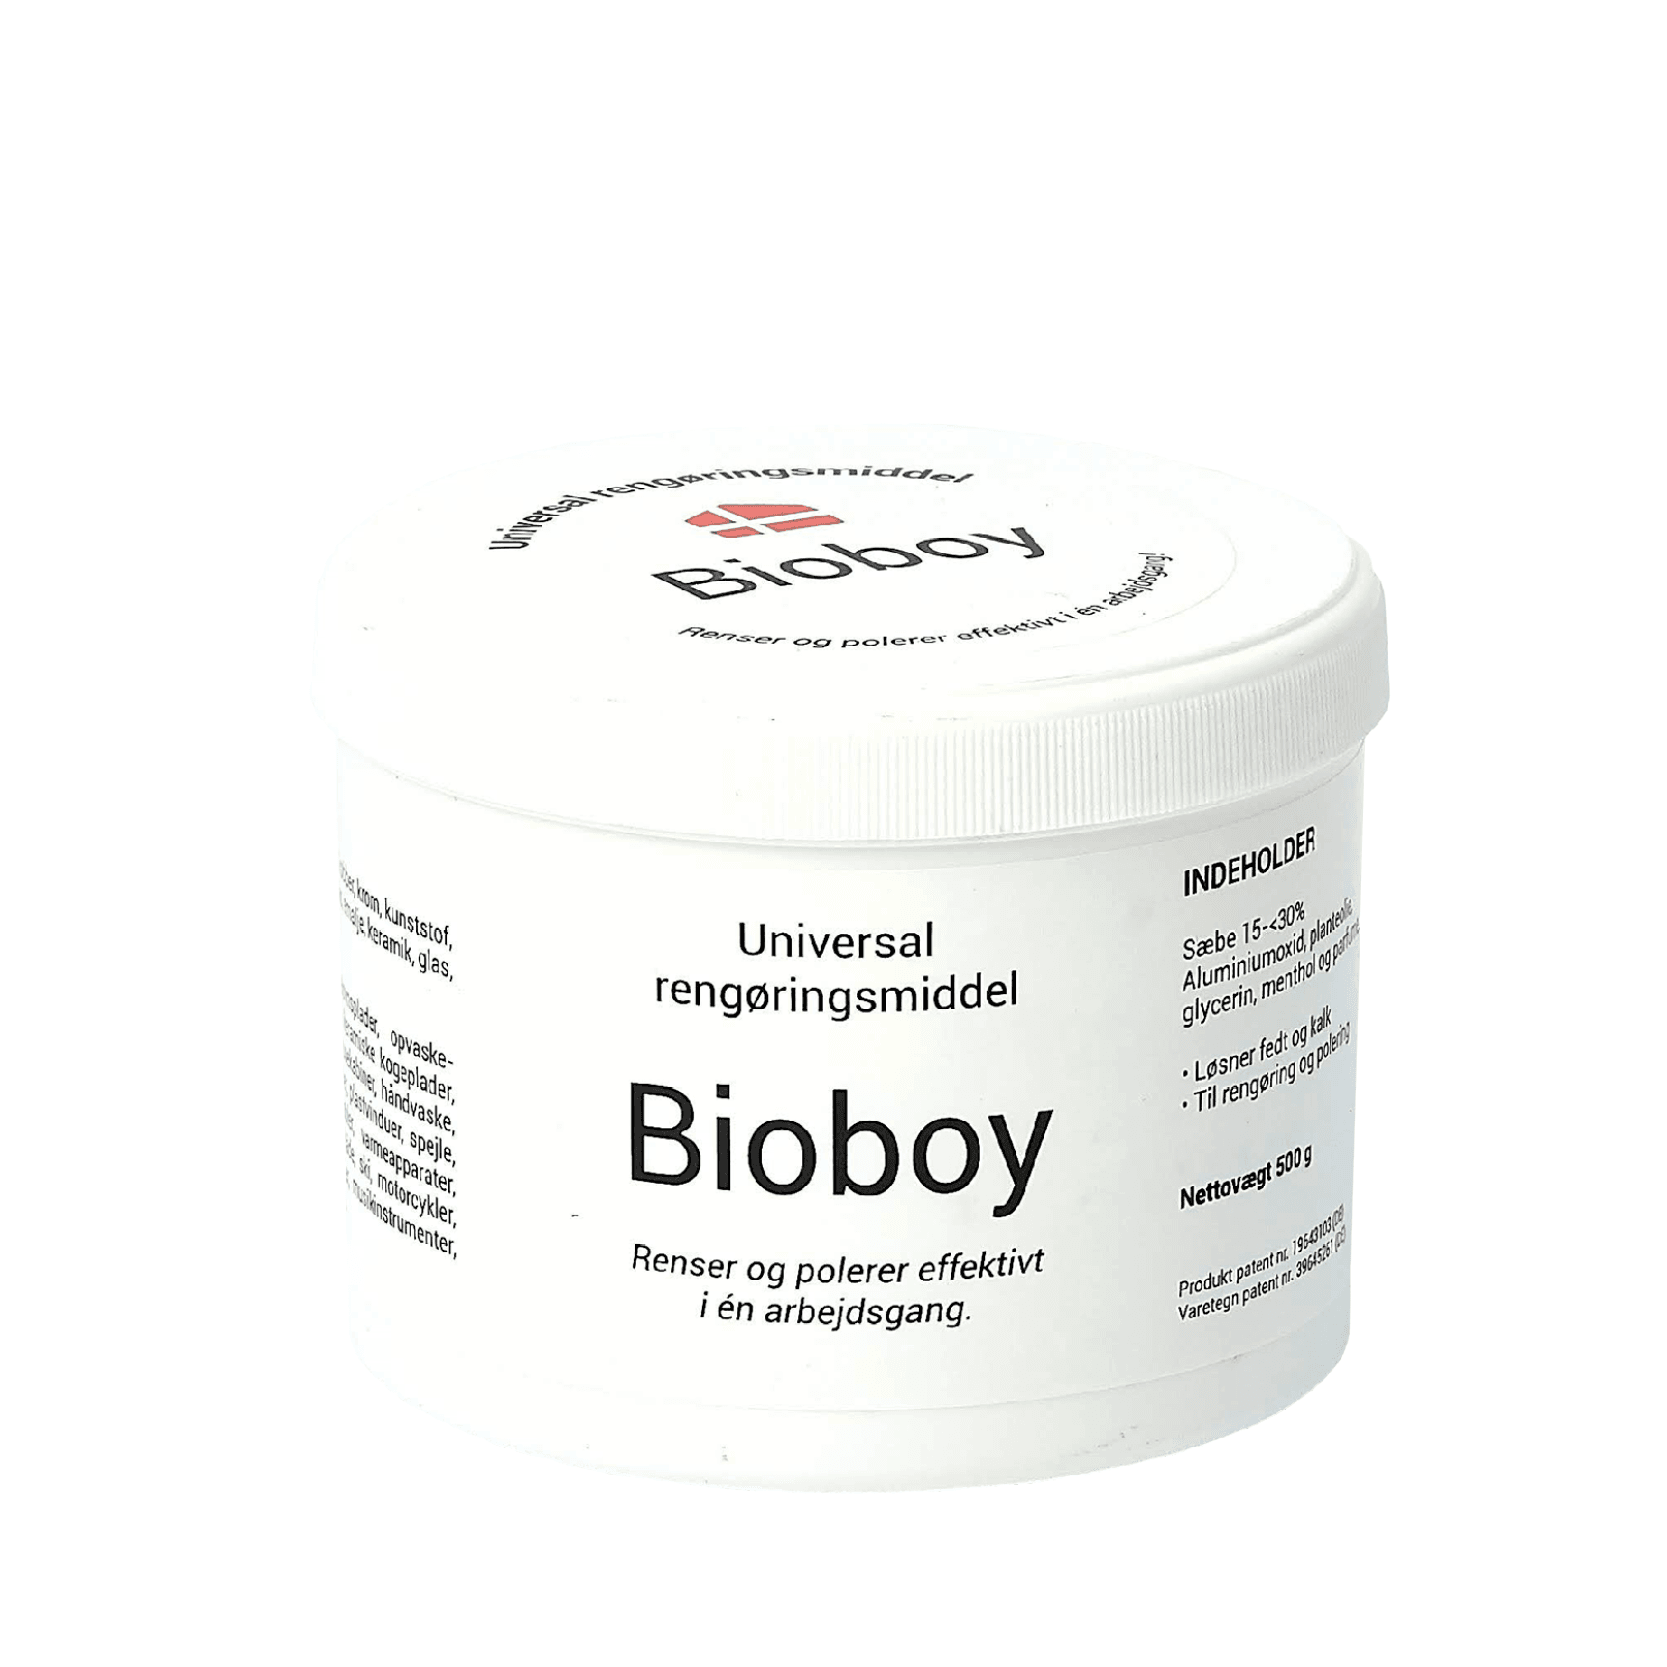 #2 - Bioboy Universal Rengøringsmiddel